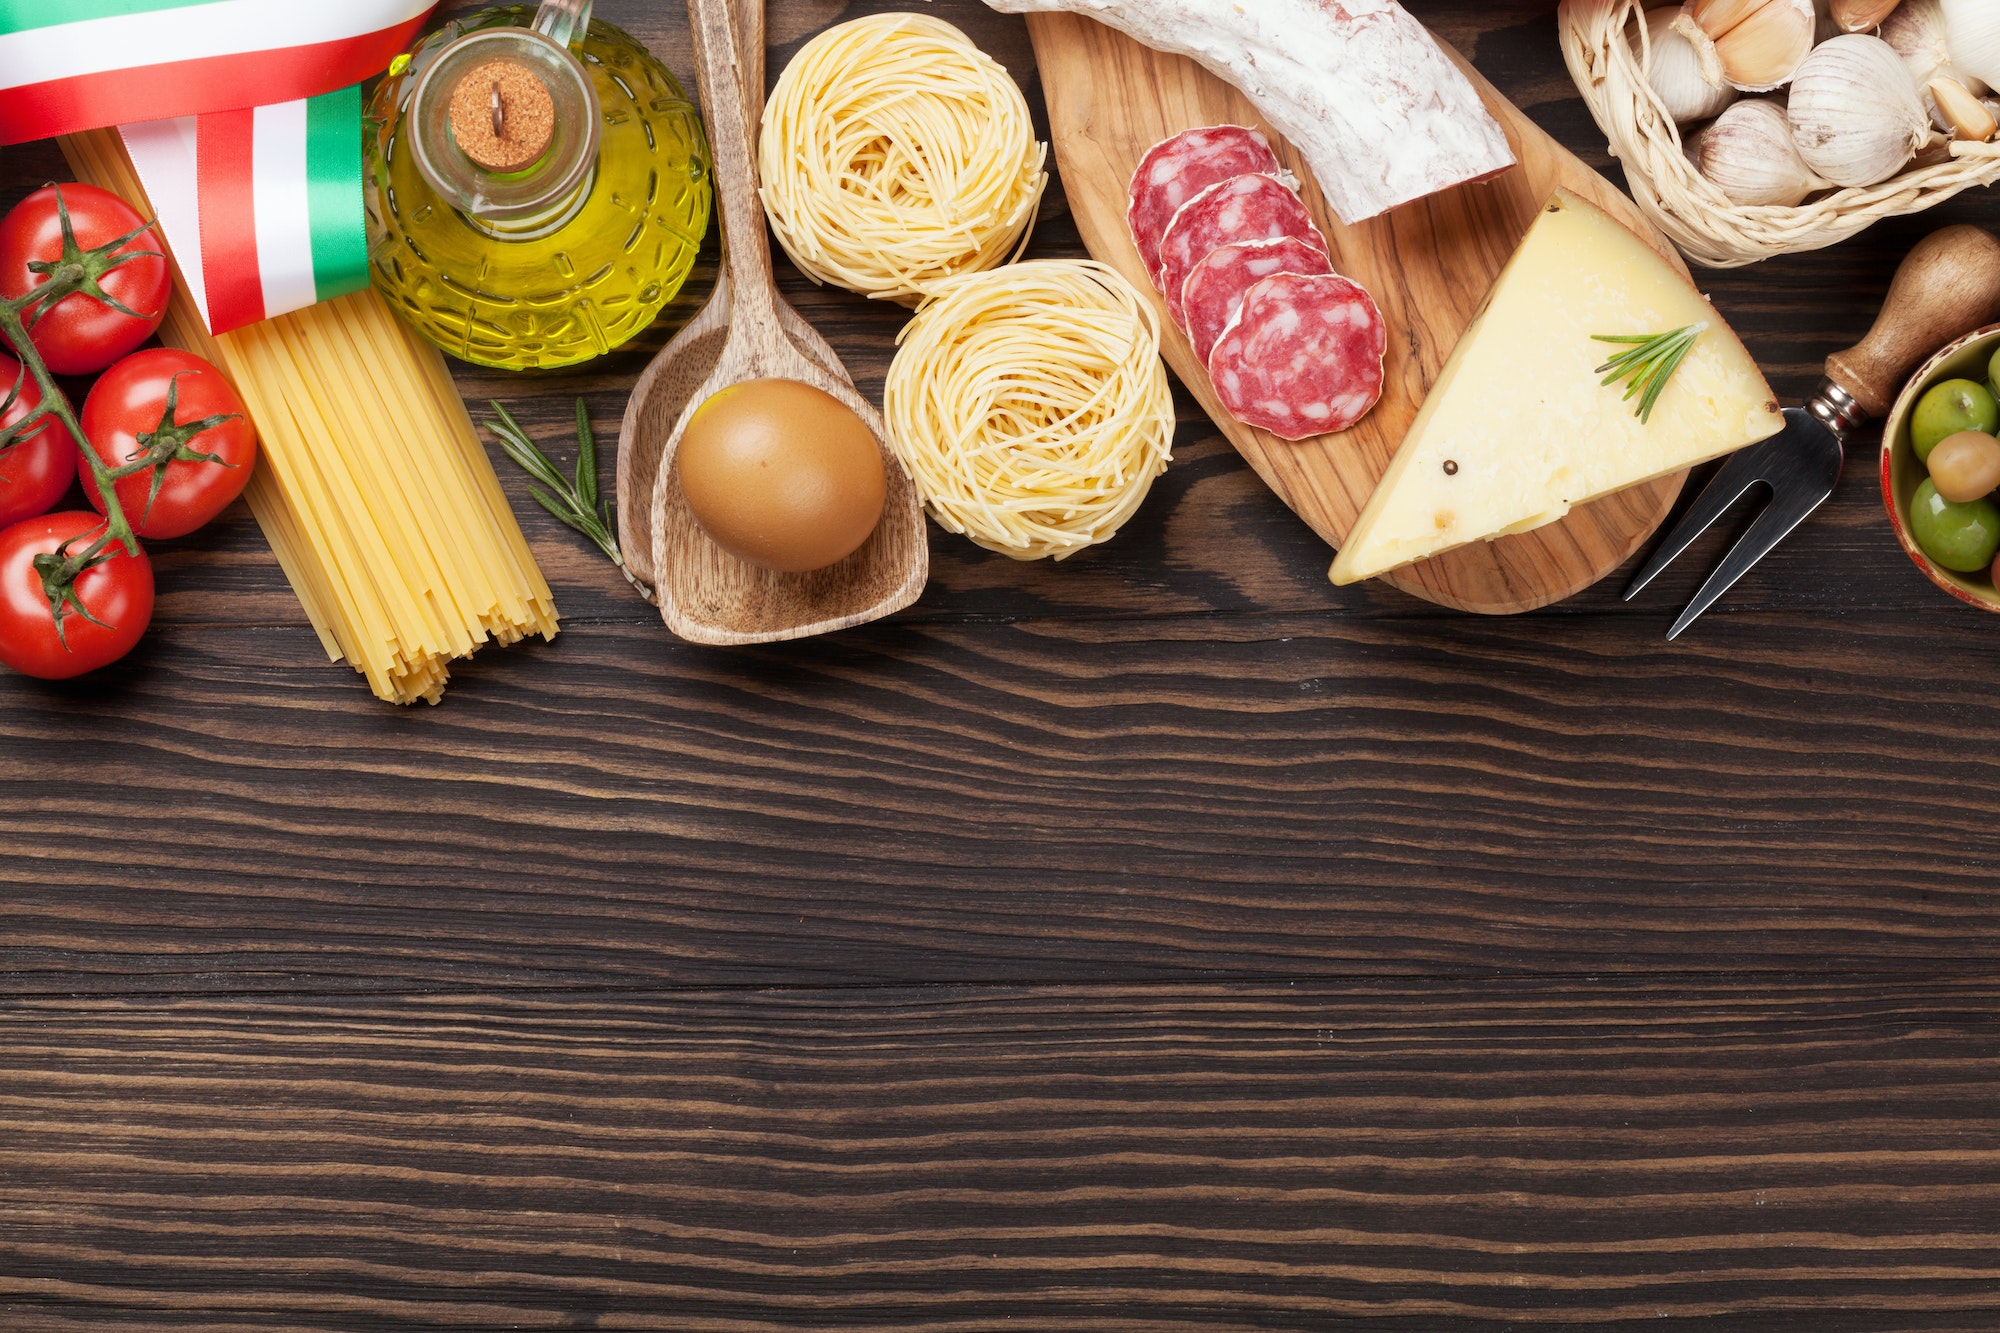 Italian cuisine food ingredients